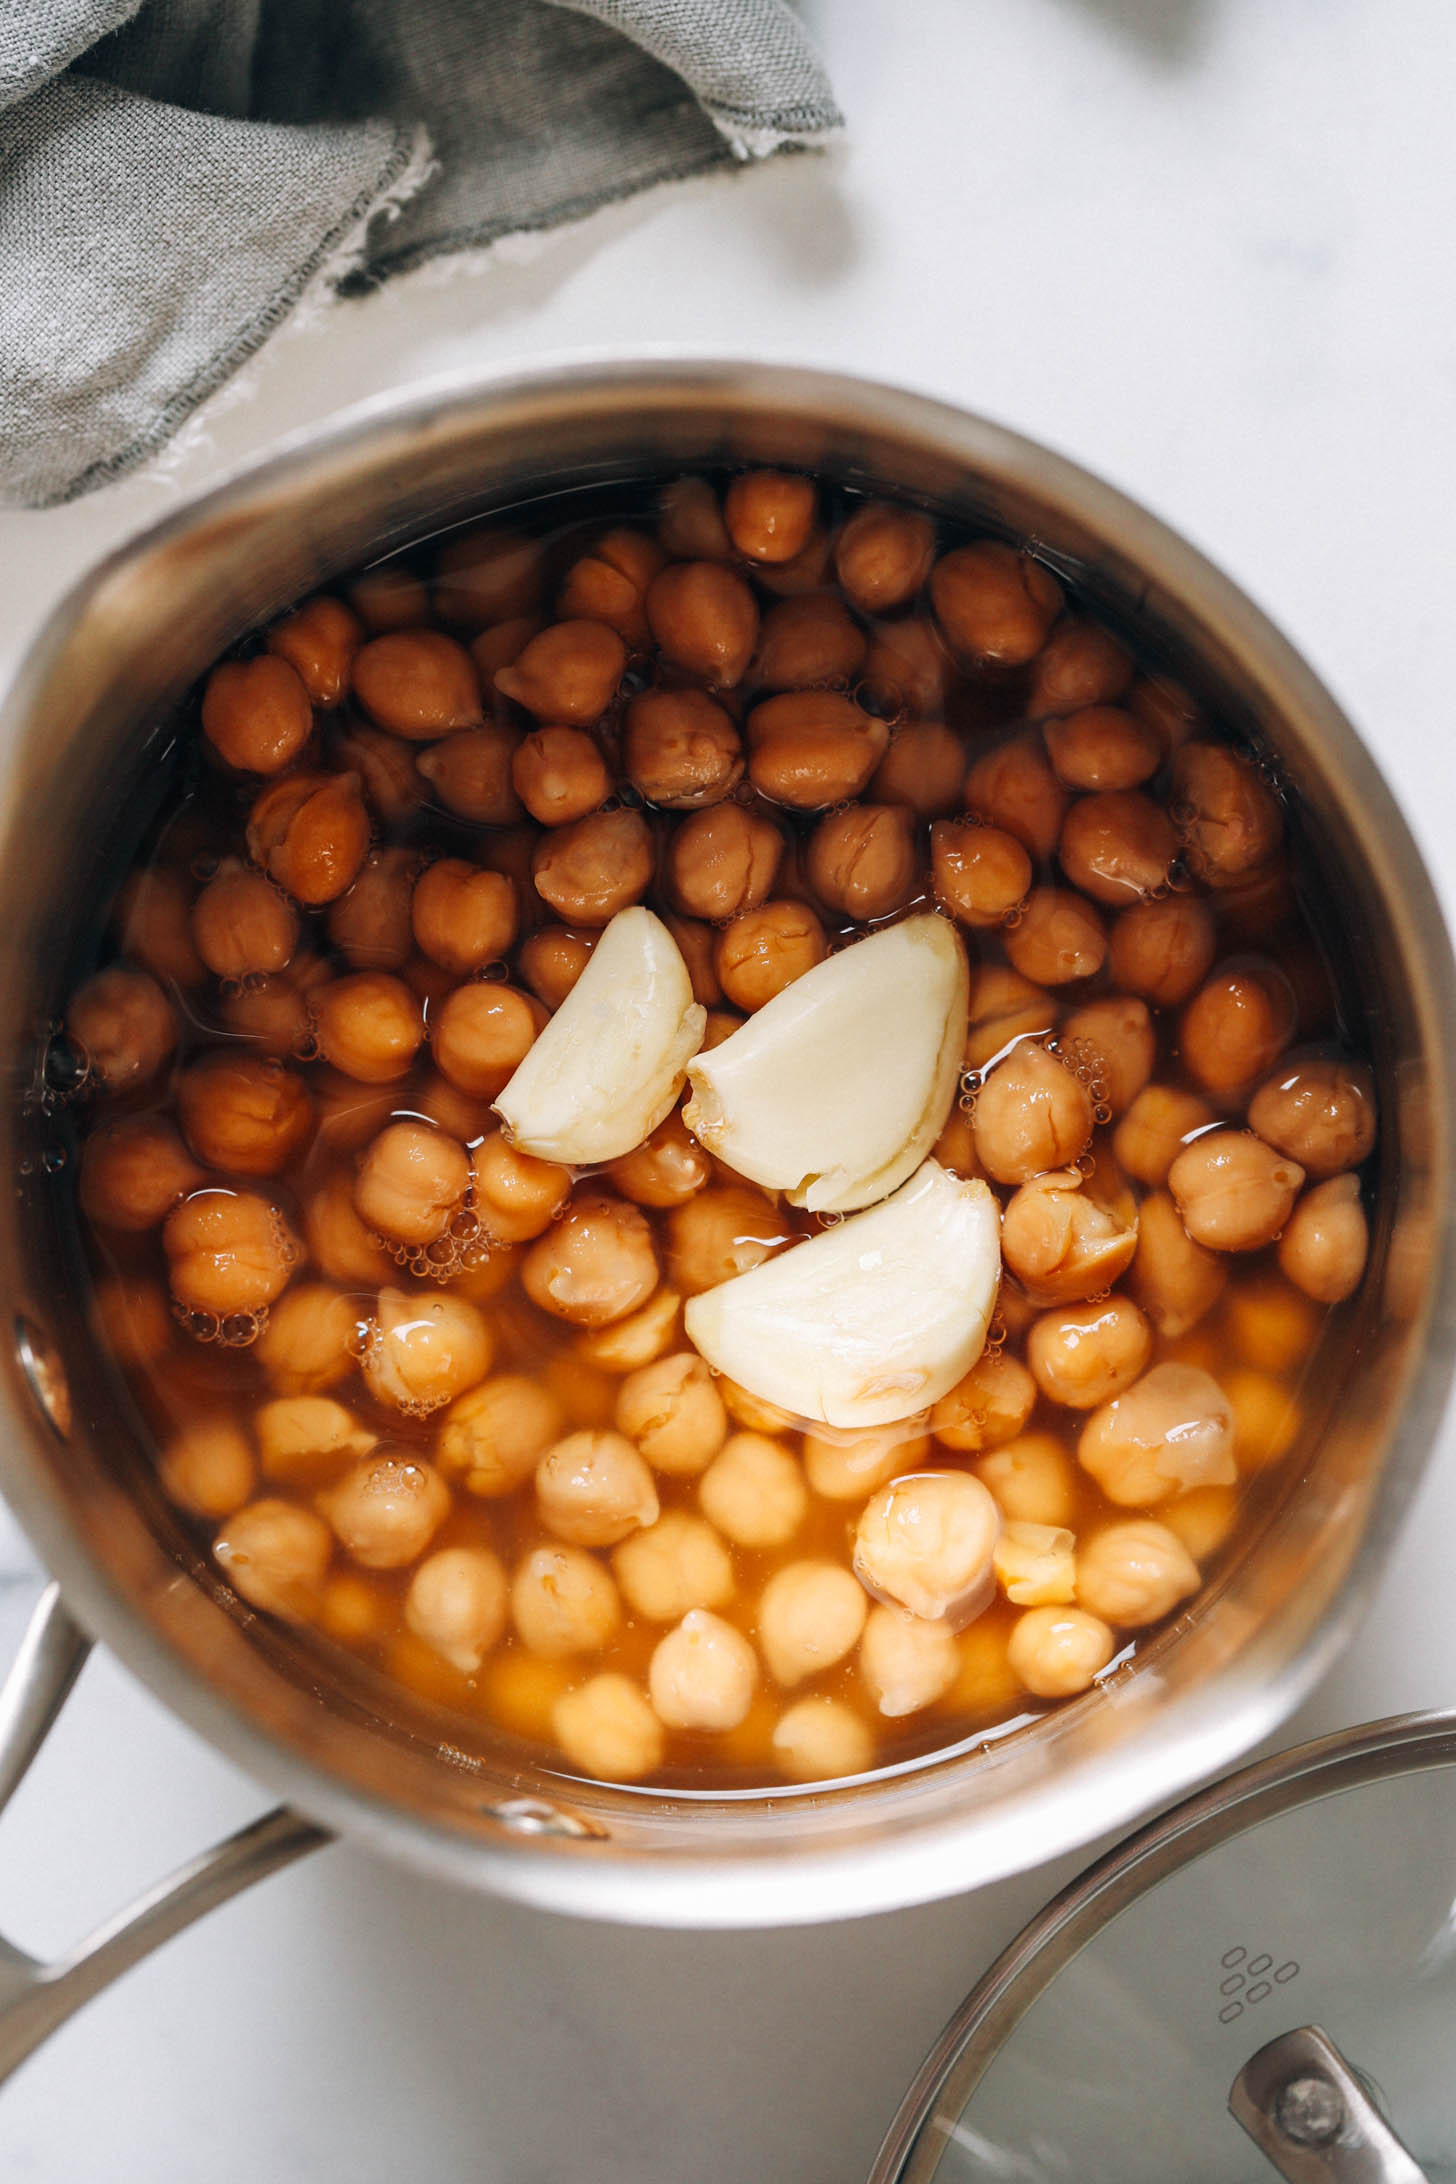 Chickpeas and garlic cloves in a saucepan